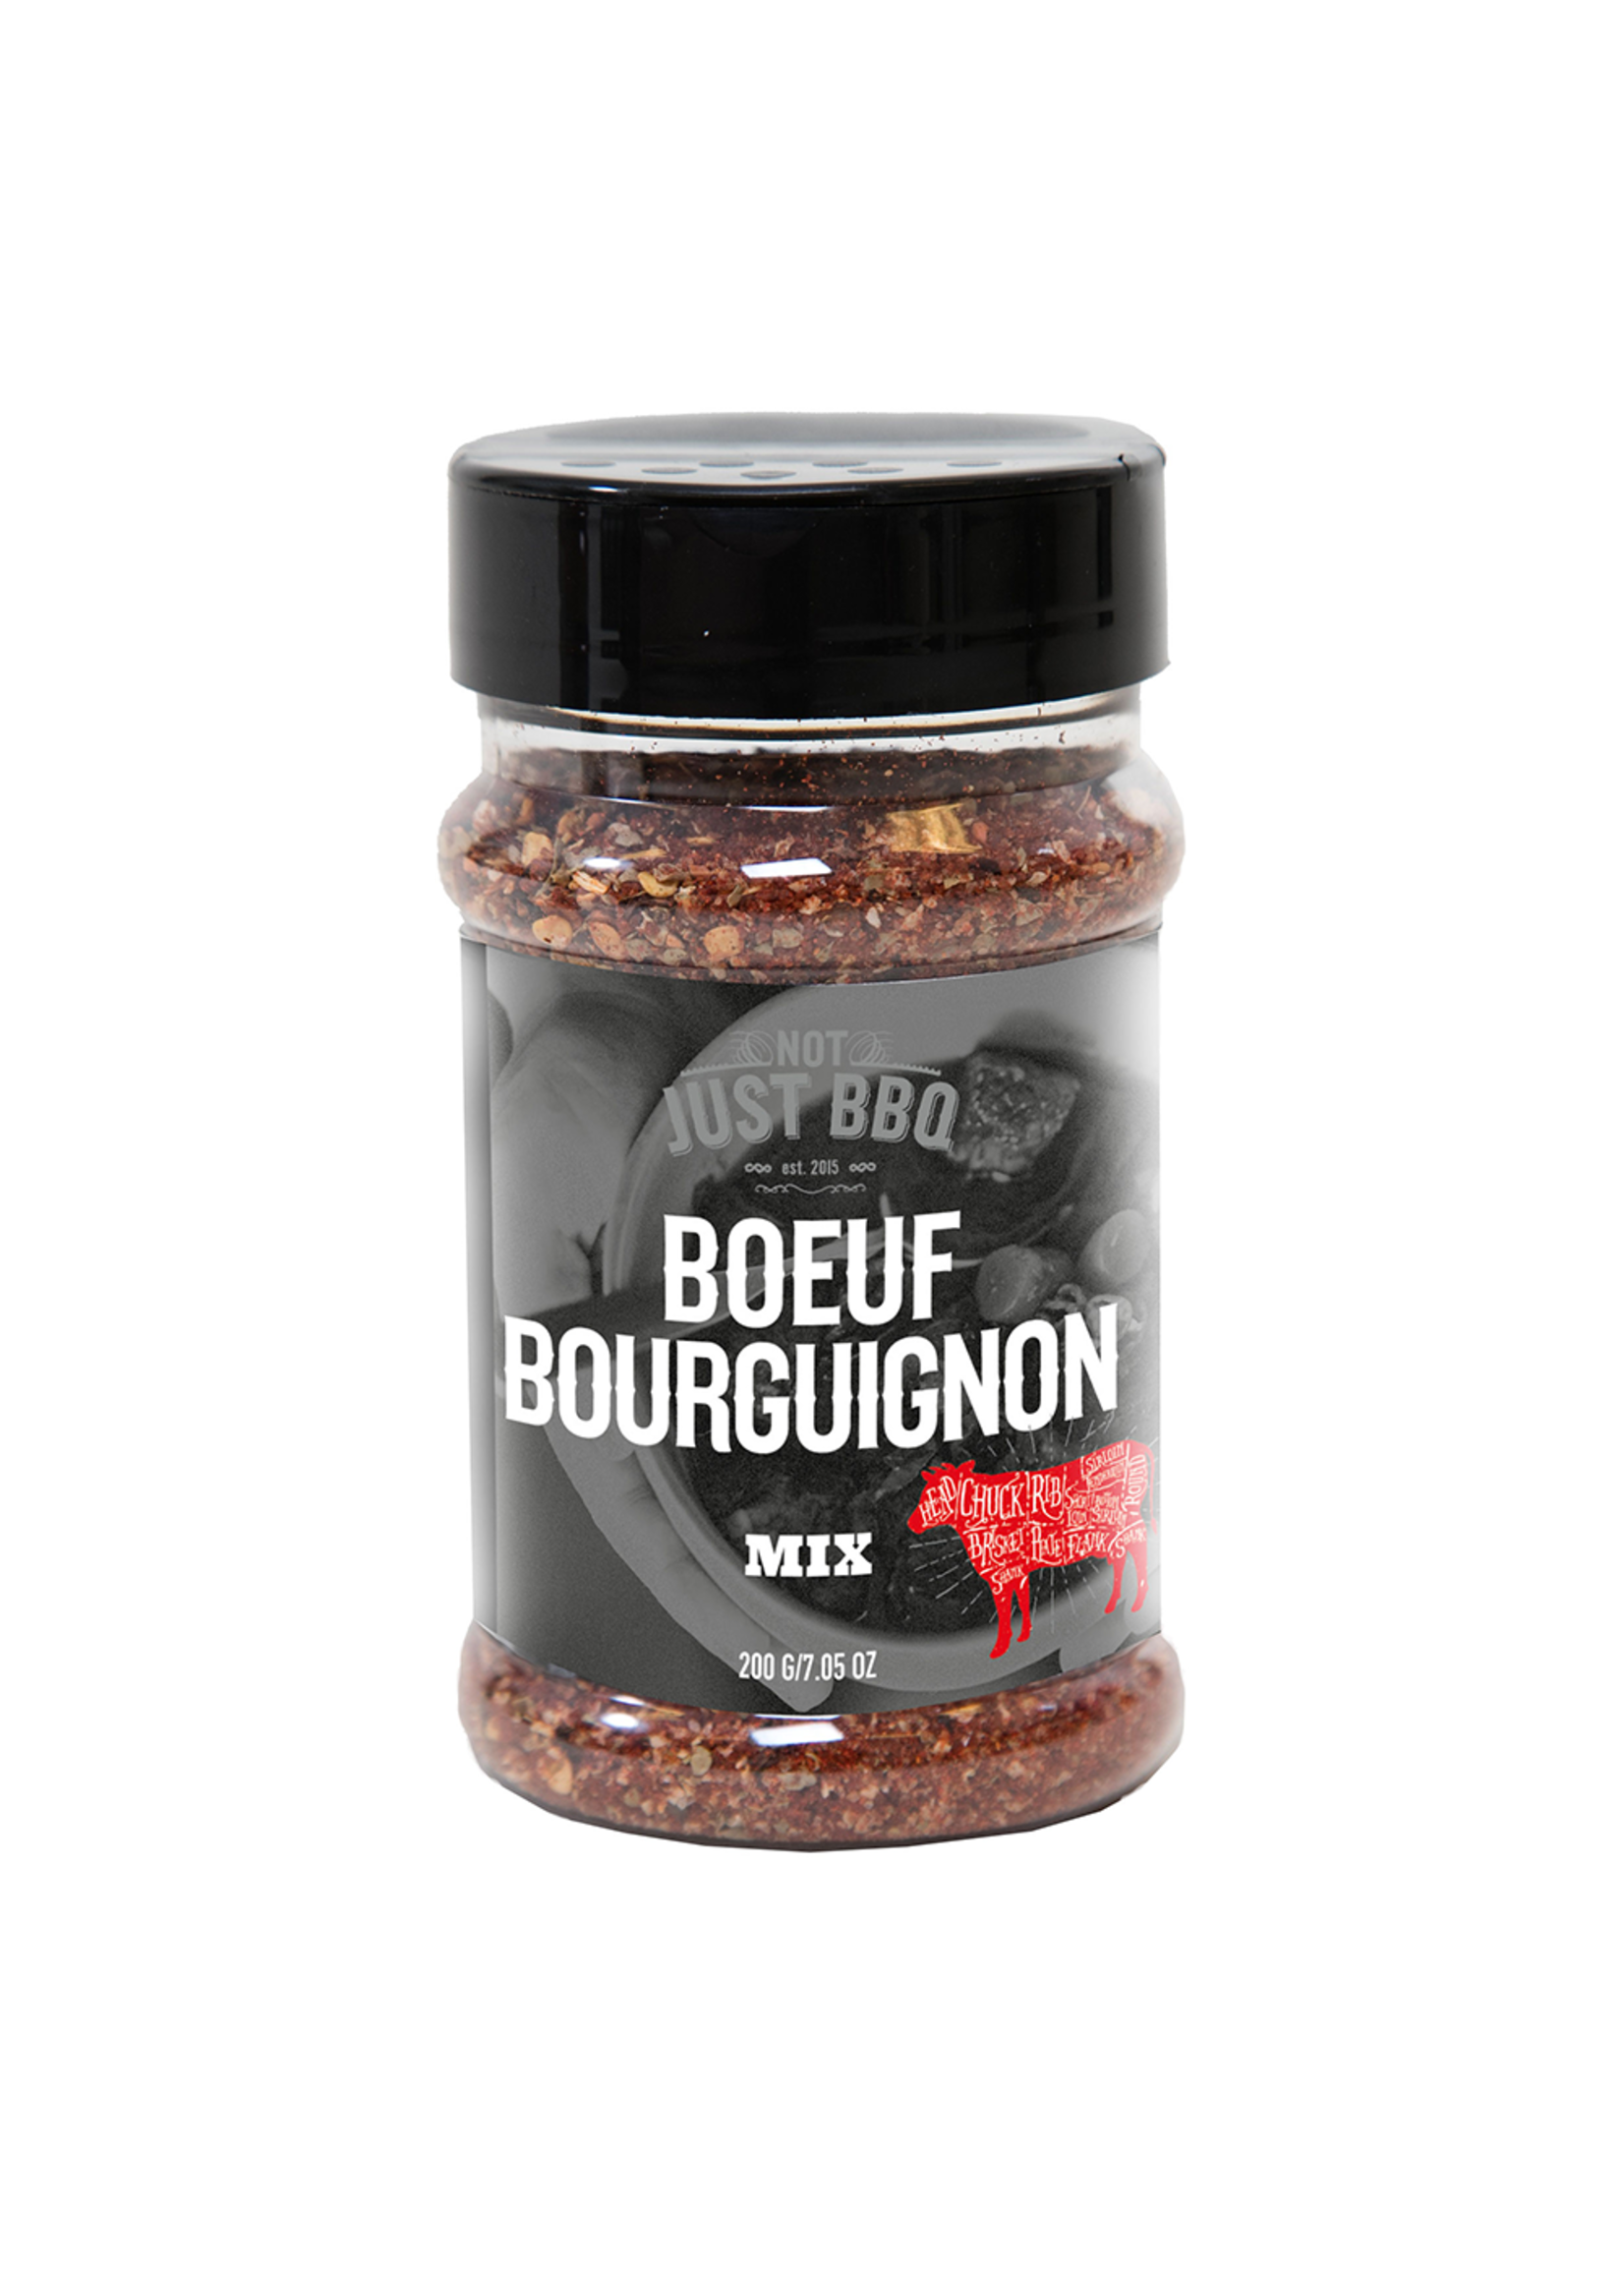 NotJustBBQ Boeuf Bourguignon Seasoning